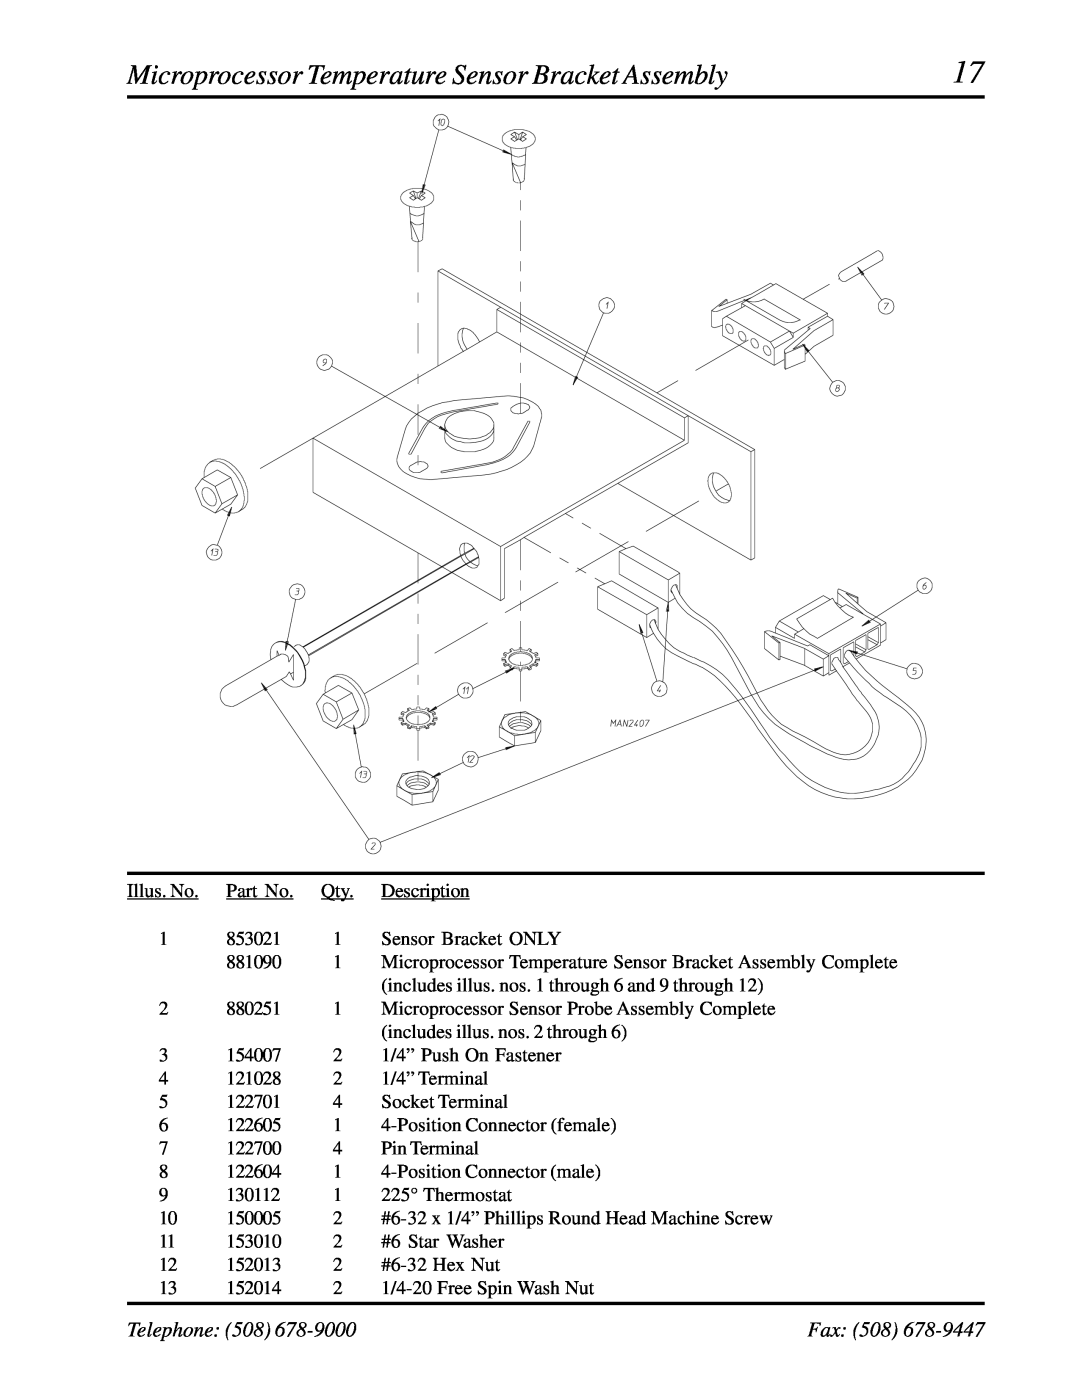 American Dryer Corp WDA-530, ADG-530 manual Microprocessor Temperature Sensor Bracket Assembly, Telephone 508, Fax 508 